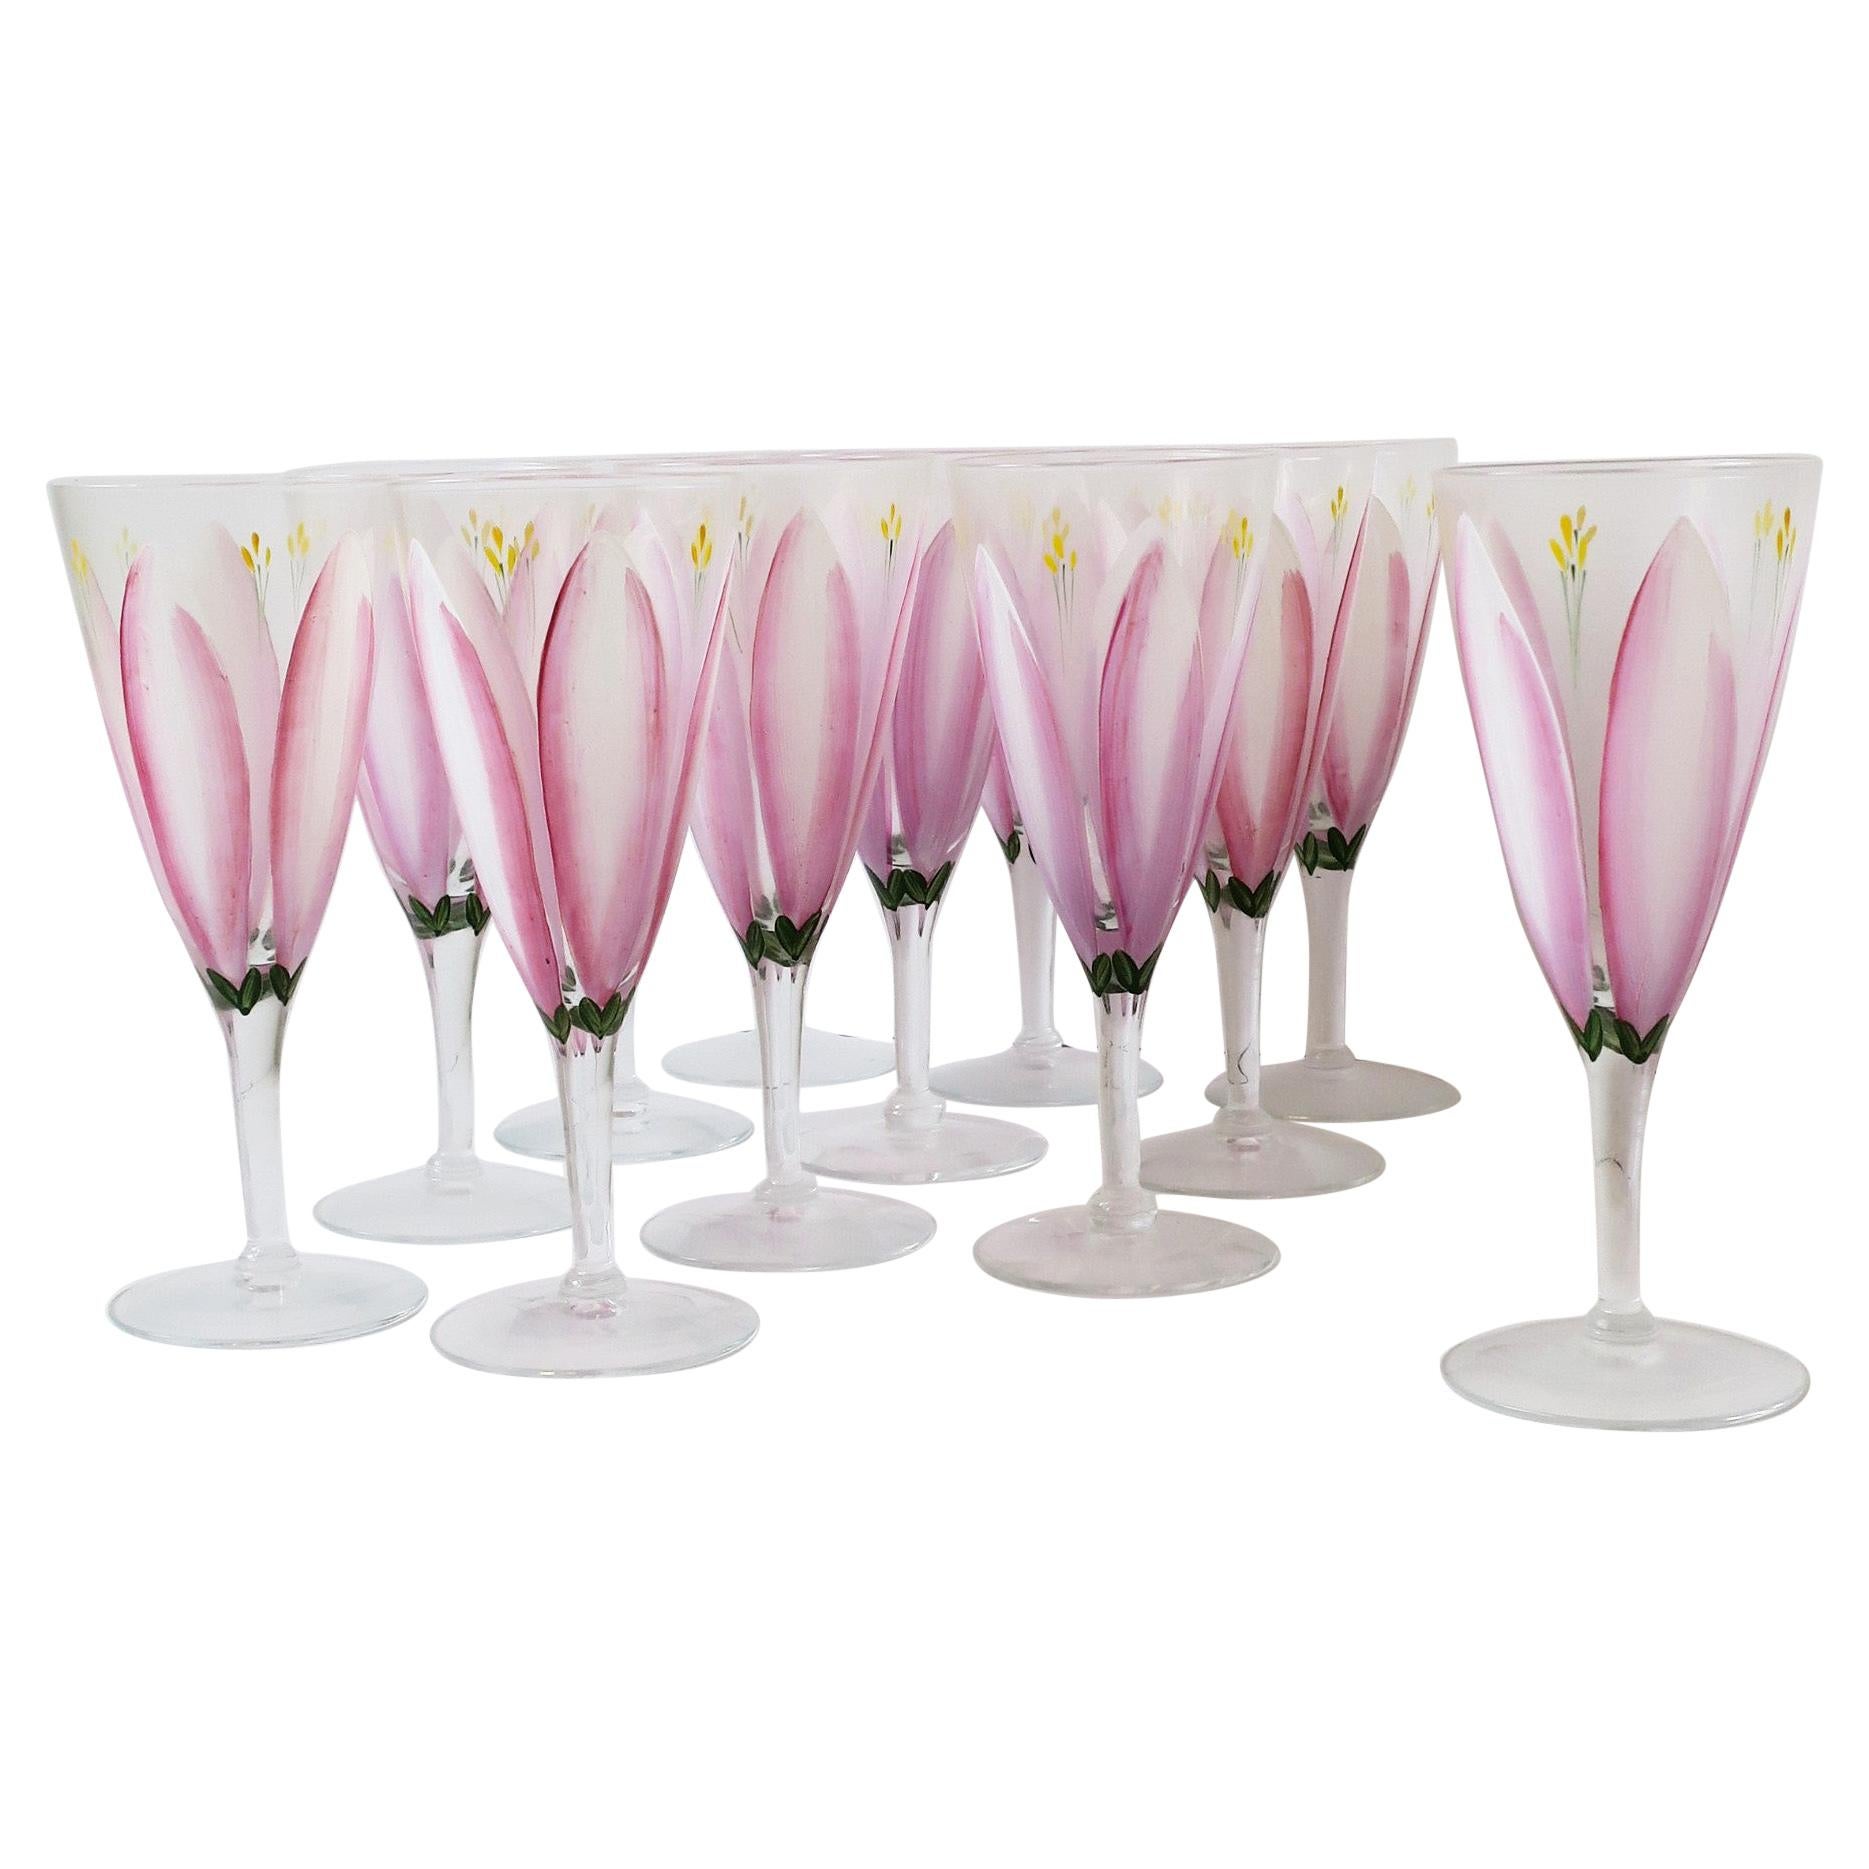 Champagne Flutes Glasses with Pink Tulip Flower Design, Set of 12